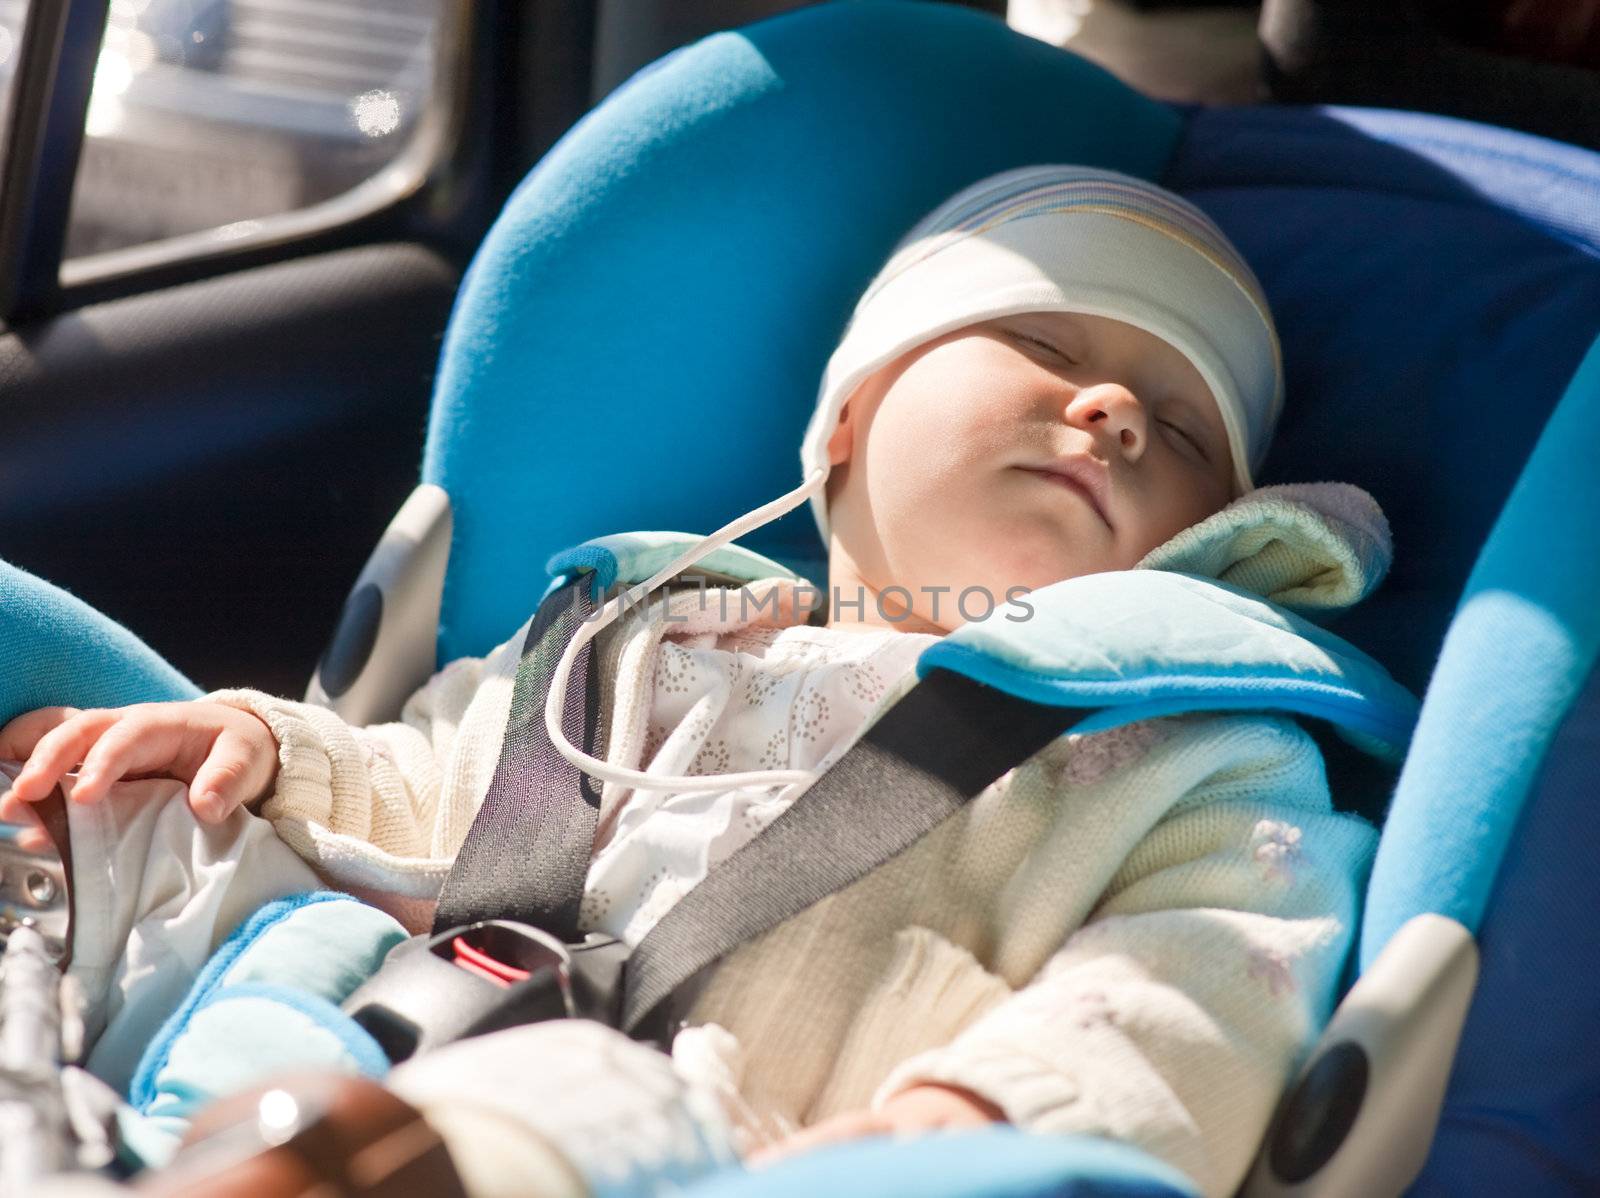 Toddler sleeping in a car seat